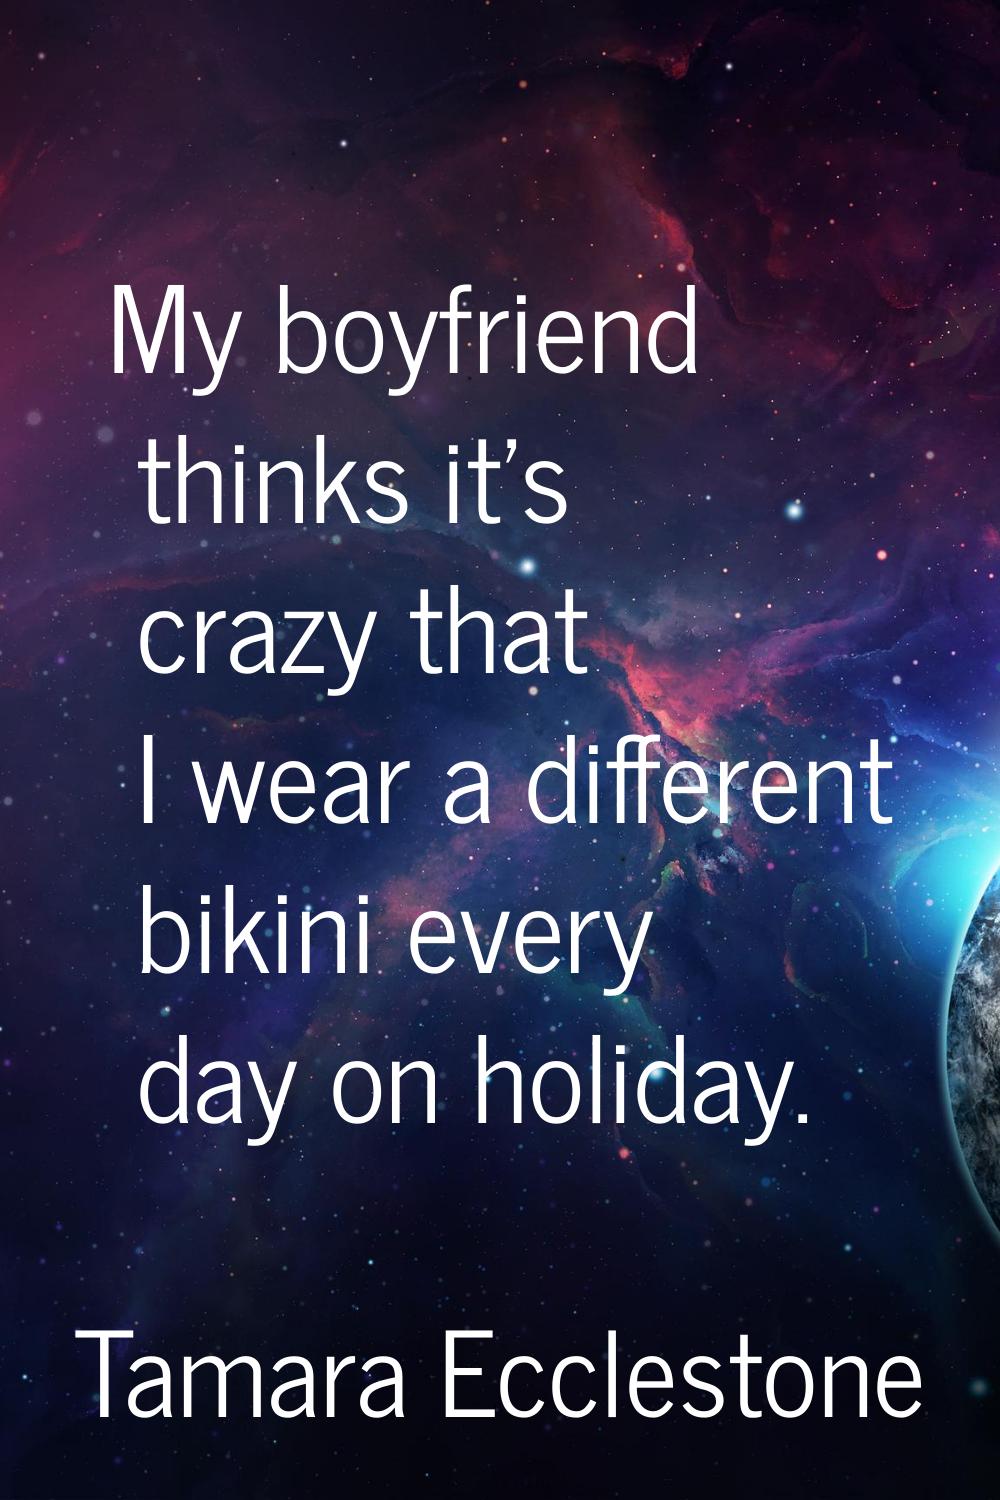 My boyfriend thinks it's crazy that I wear a different bikini every day on holiday.